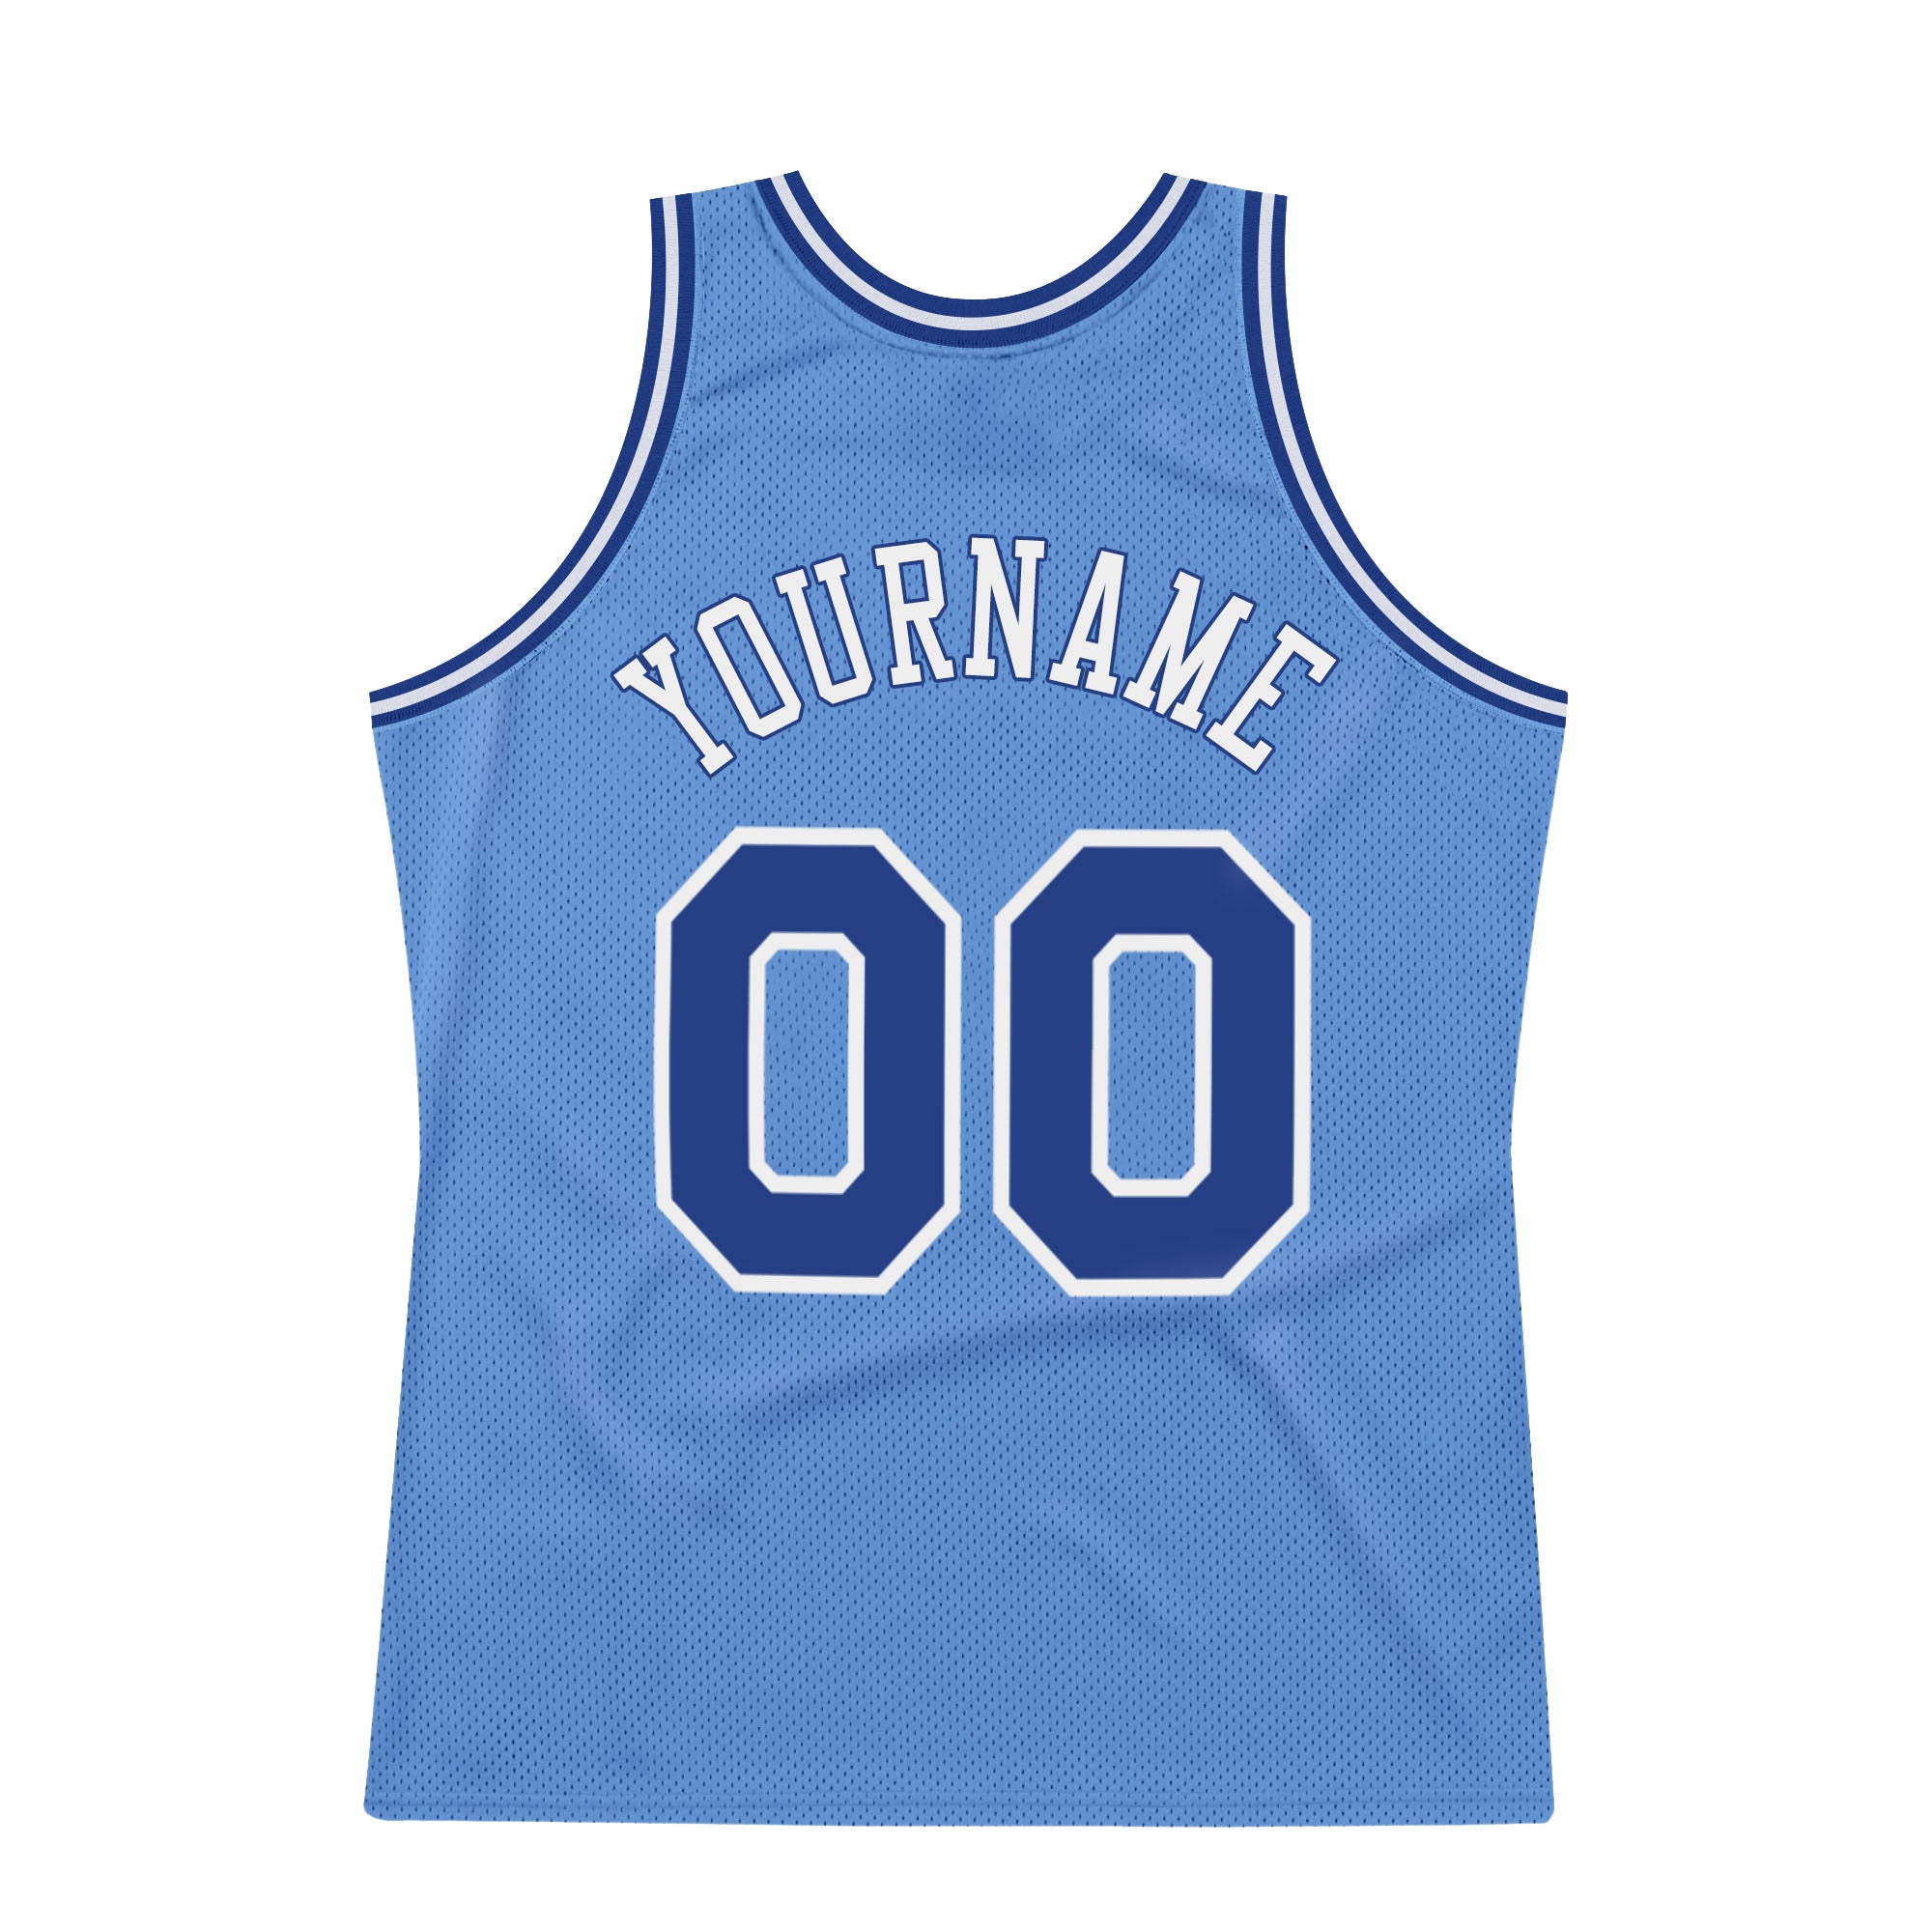 Custom Light Blue Royal-White Authentic Throwback Basketball Jersey